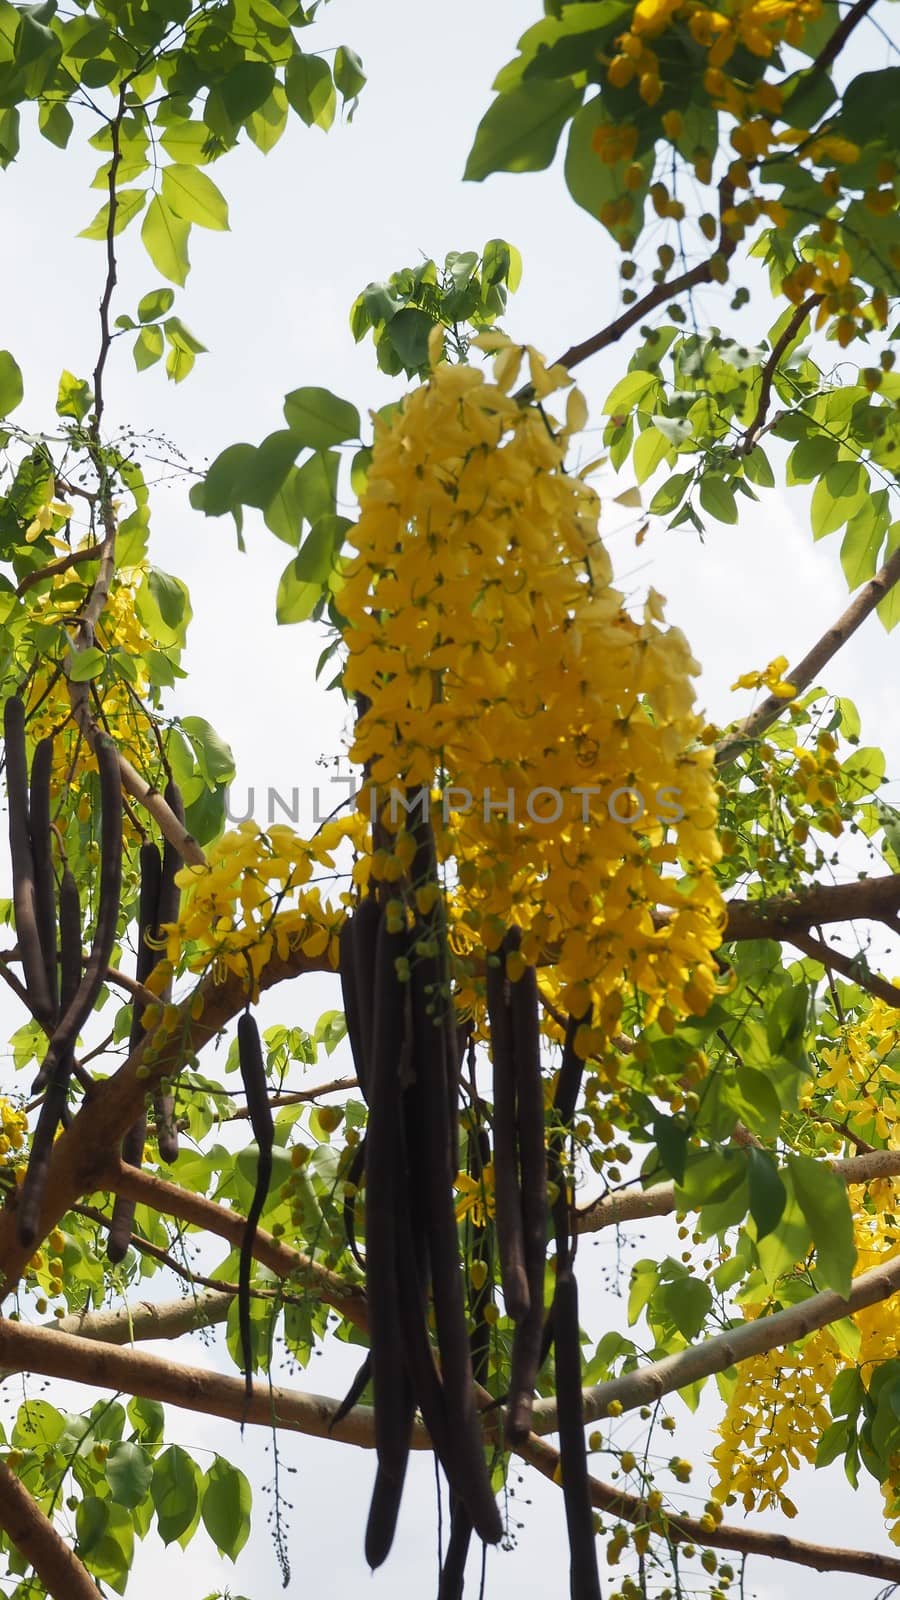 Golden shower (Cassia fistula) flowers near river siem reap cambodia by AndrewUK